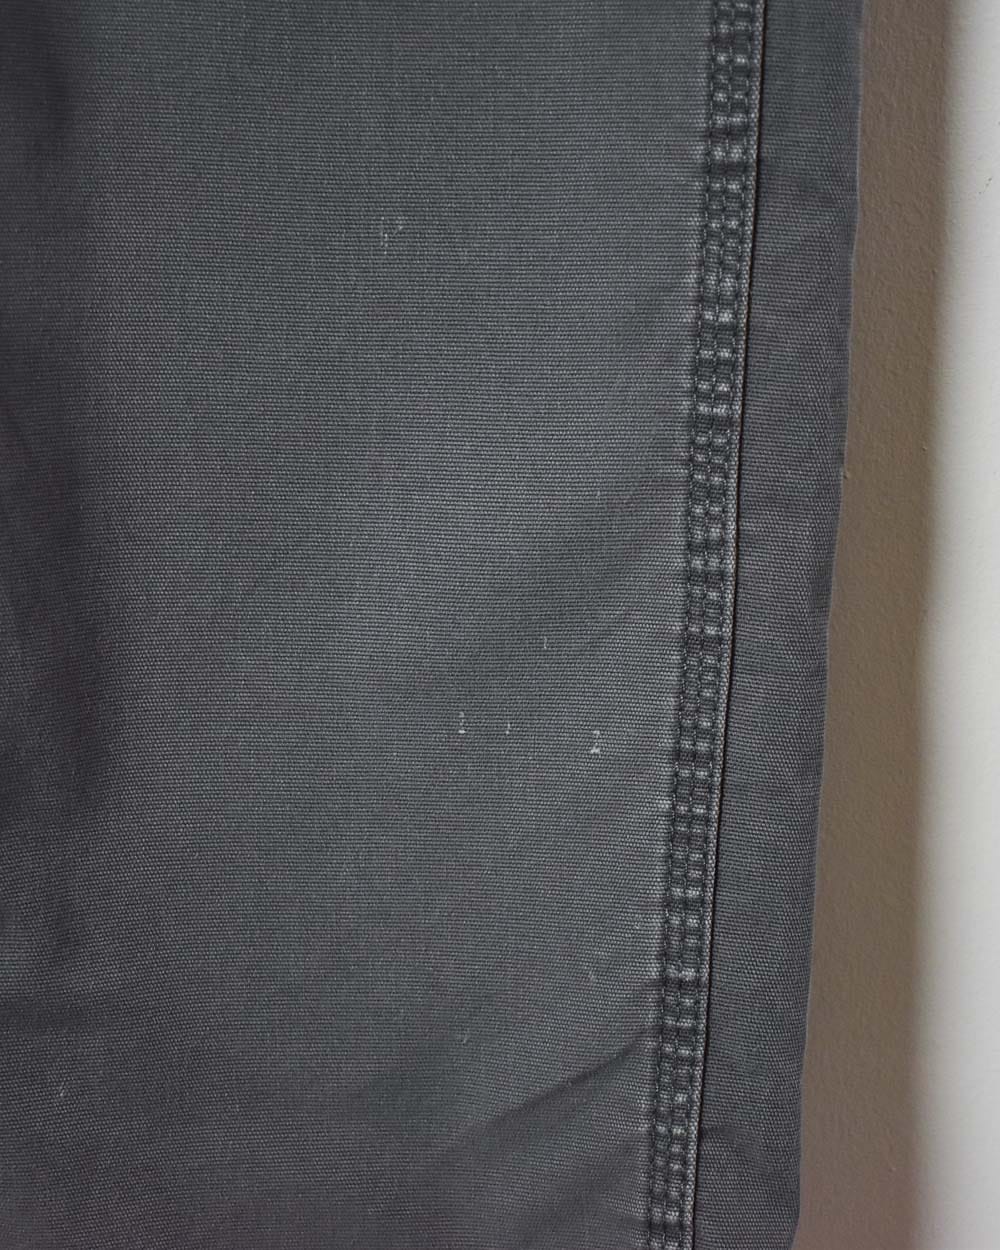 Grey Dickies Flex Carpenter Jeans - W36 L31